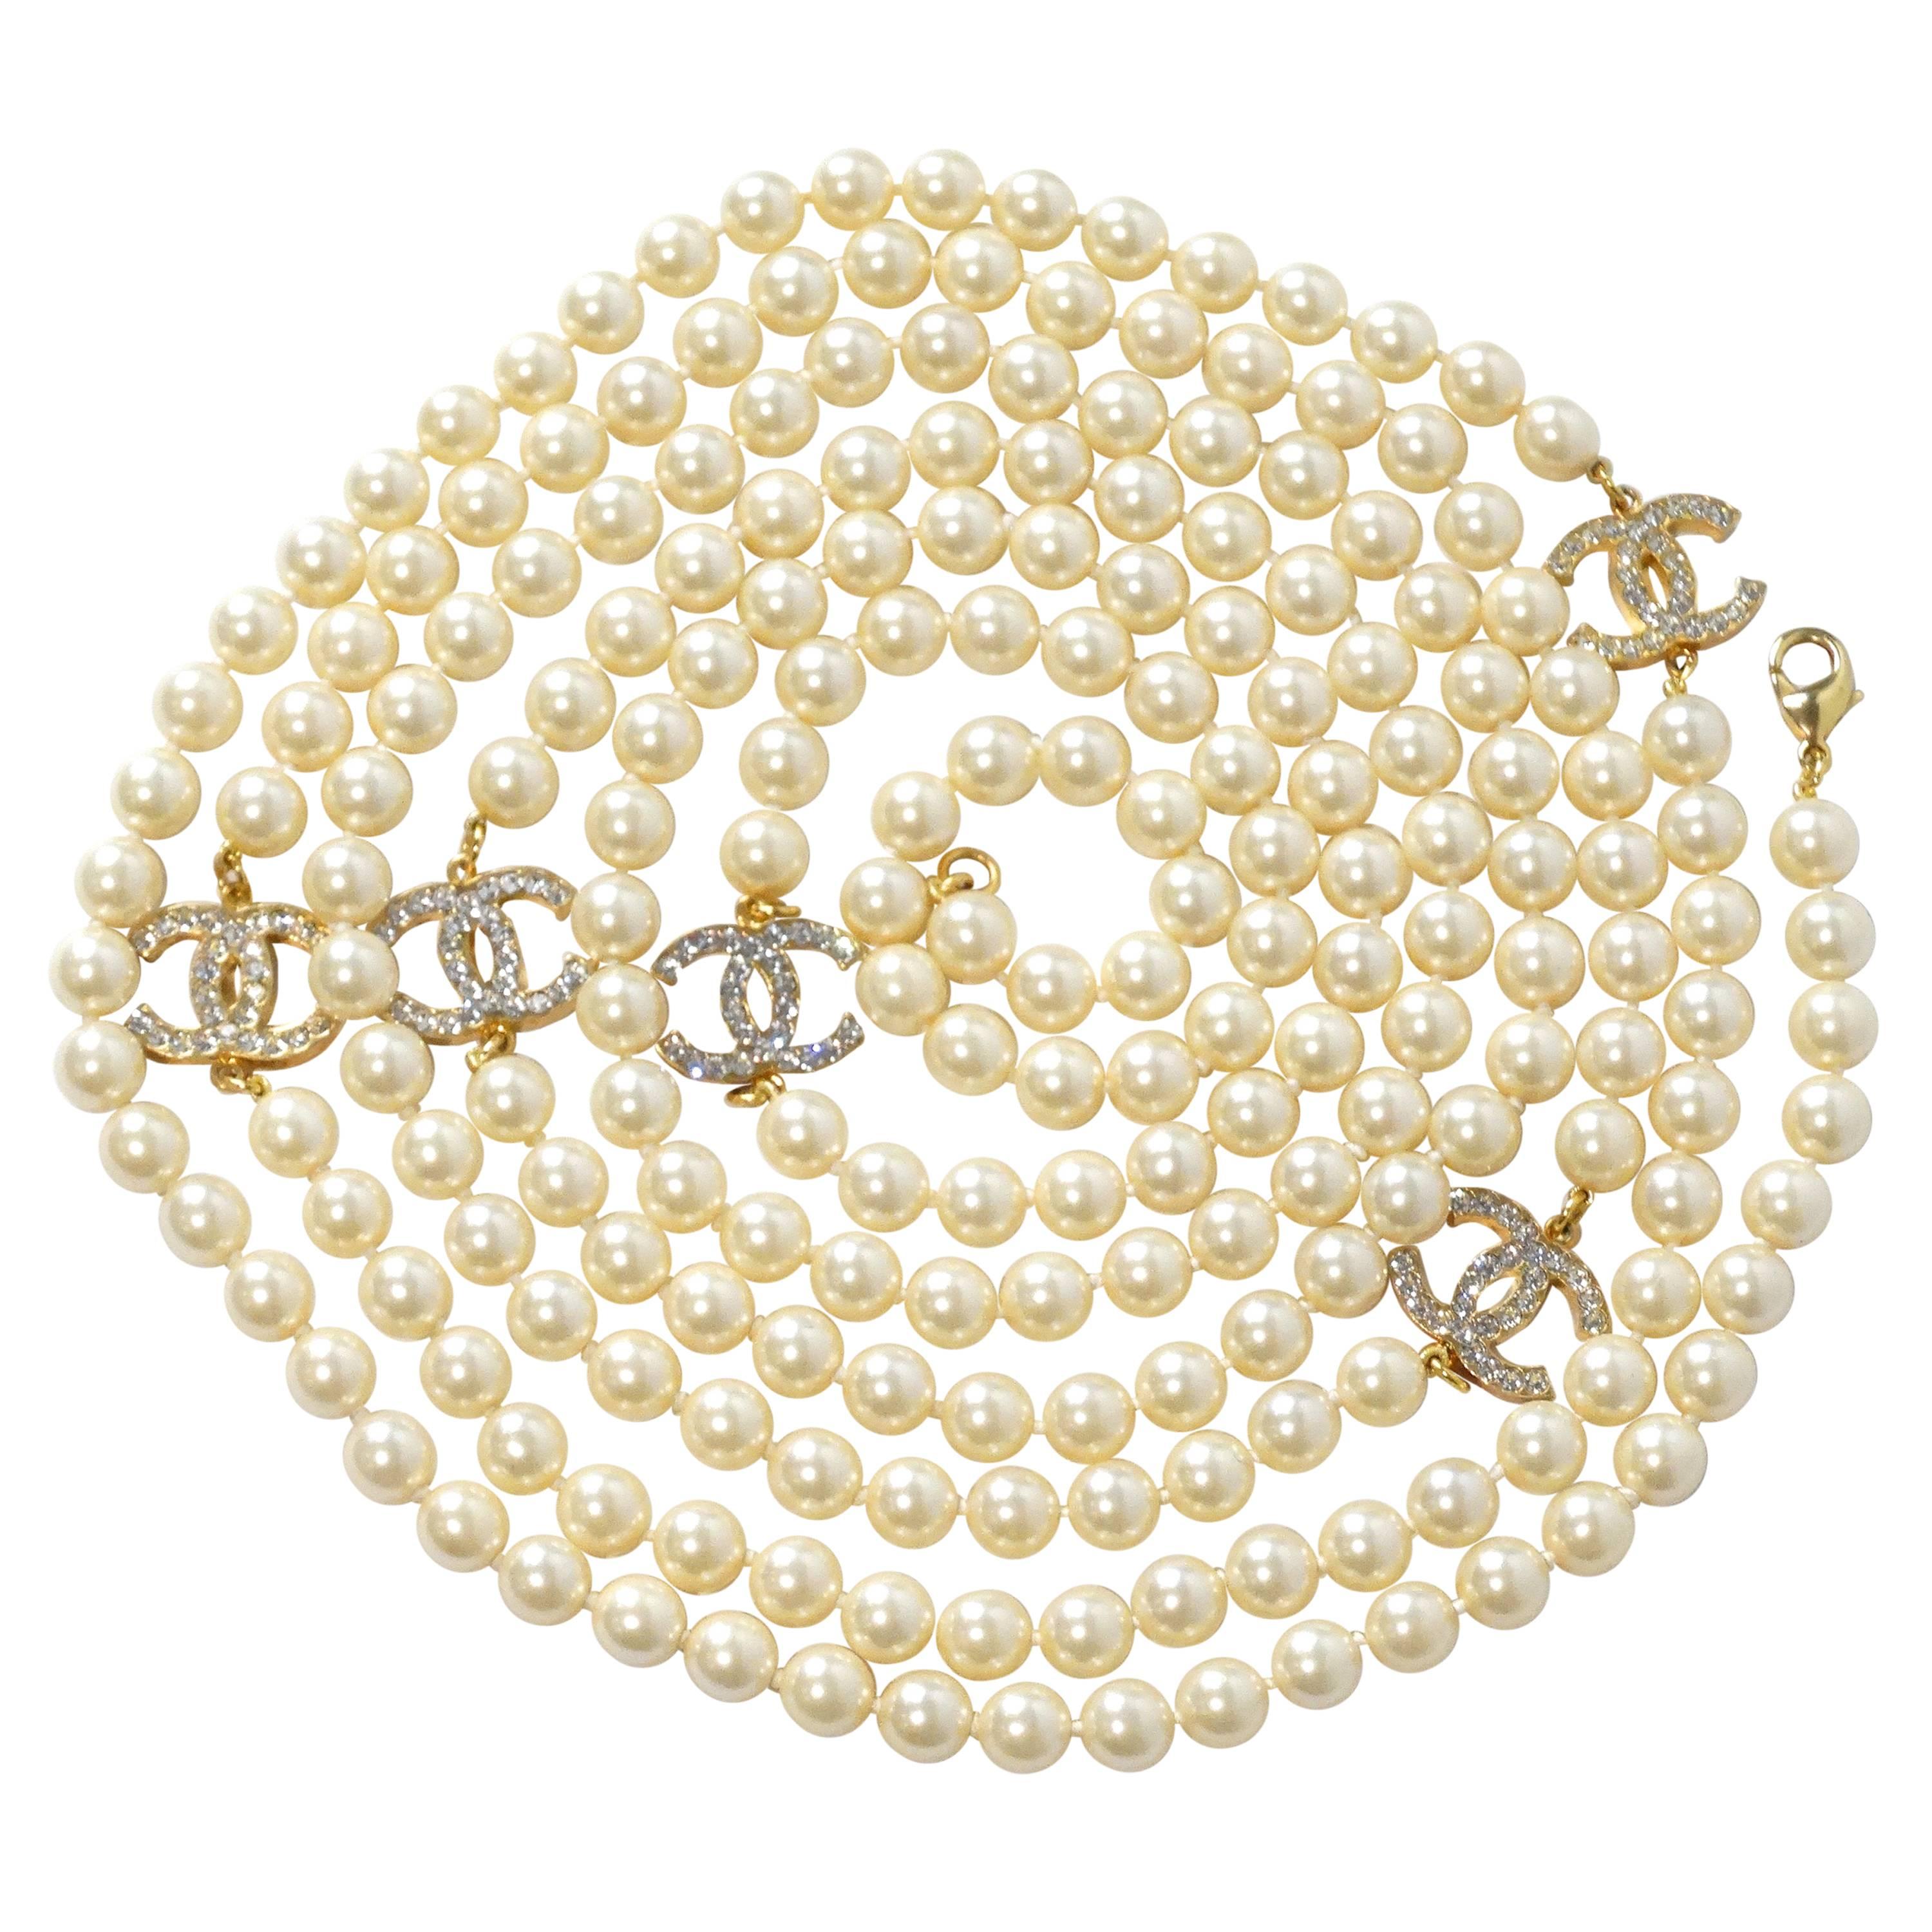 Vintage Chanel 5CC Pearl Necklace with Rhinestones